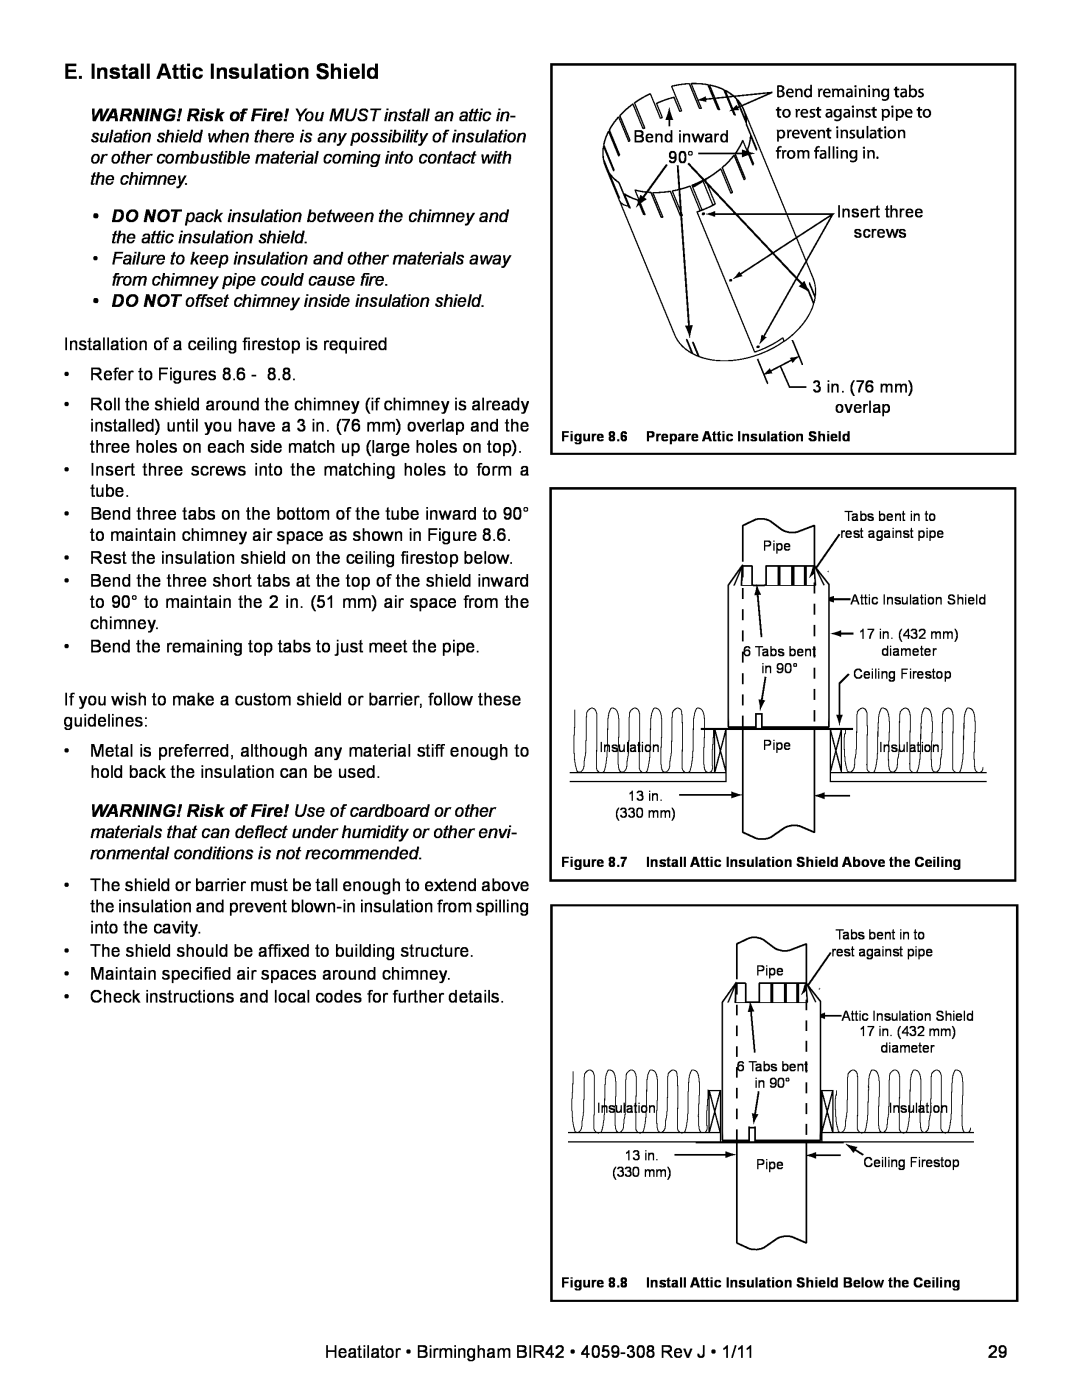 Heatiator BIR42 owner manual E. Install Attic Insulation Shield 